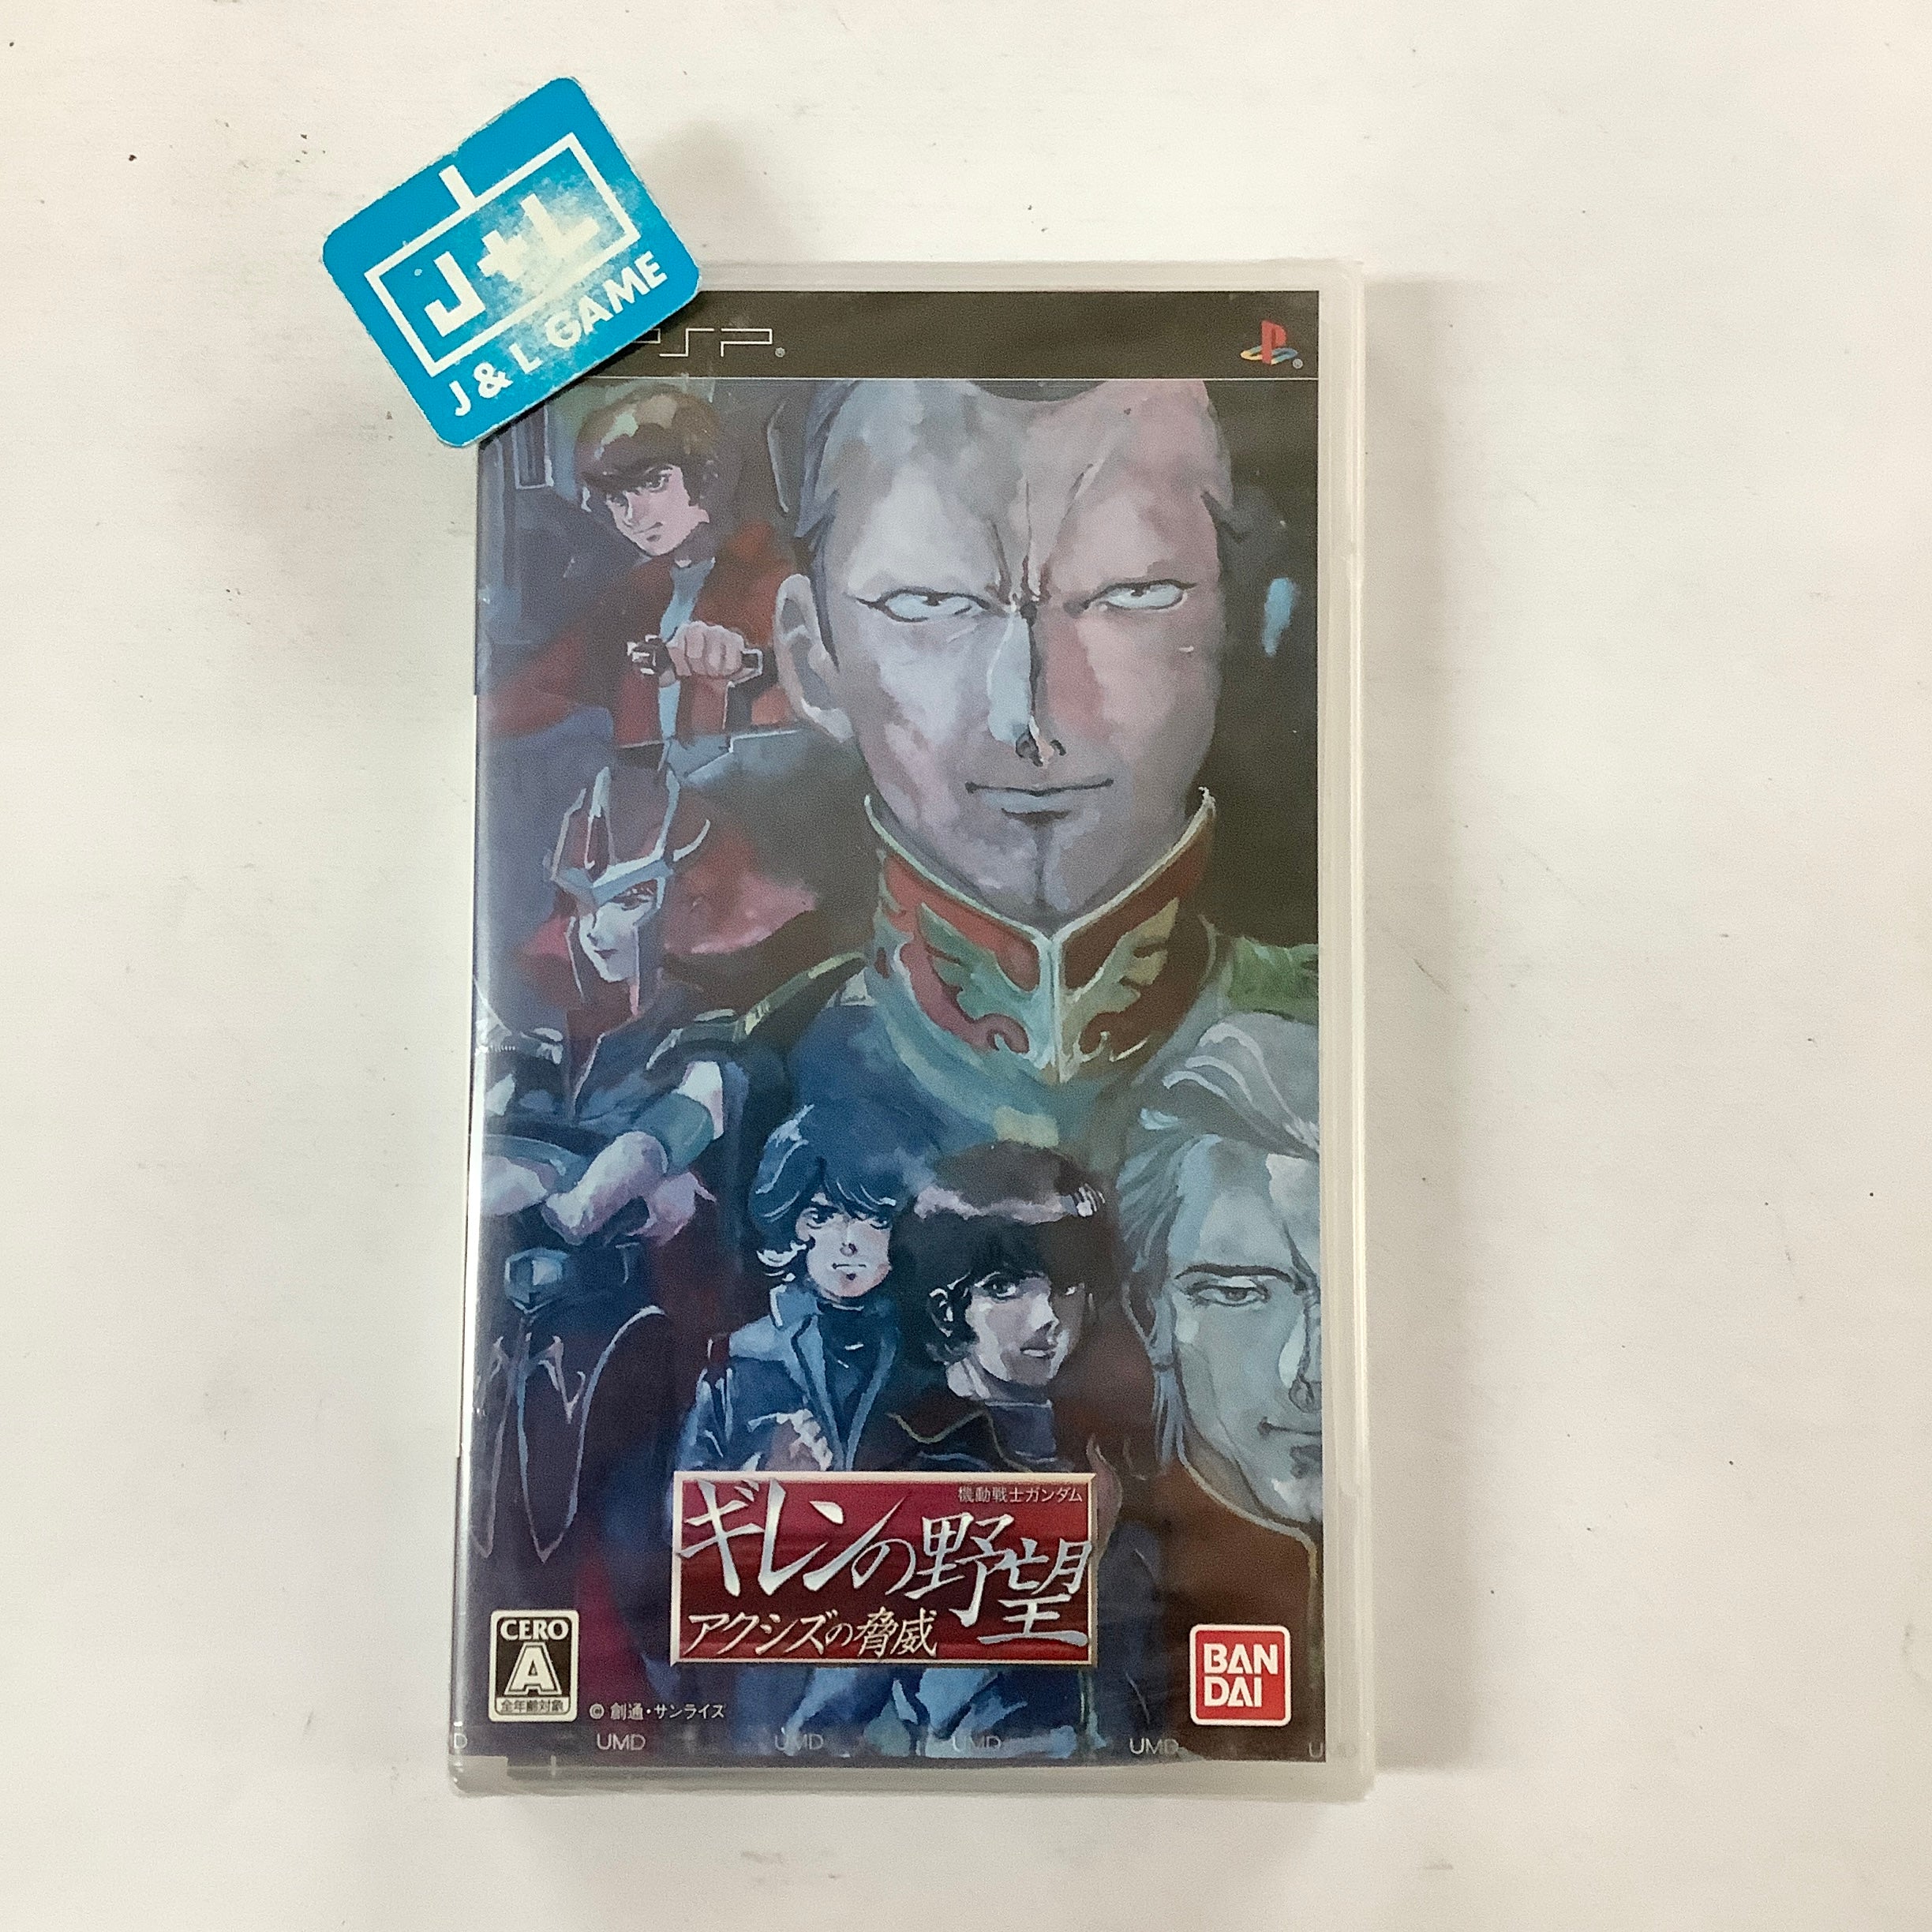 Mobile Suit Gundam: Giren no Yabou Axis no Kyoui - Sony PSP (Japanese Import) Video Games Namco Bandai Games   